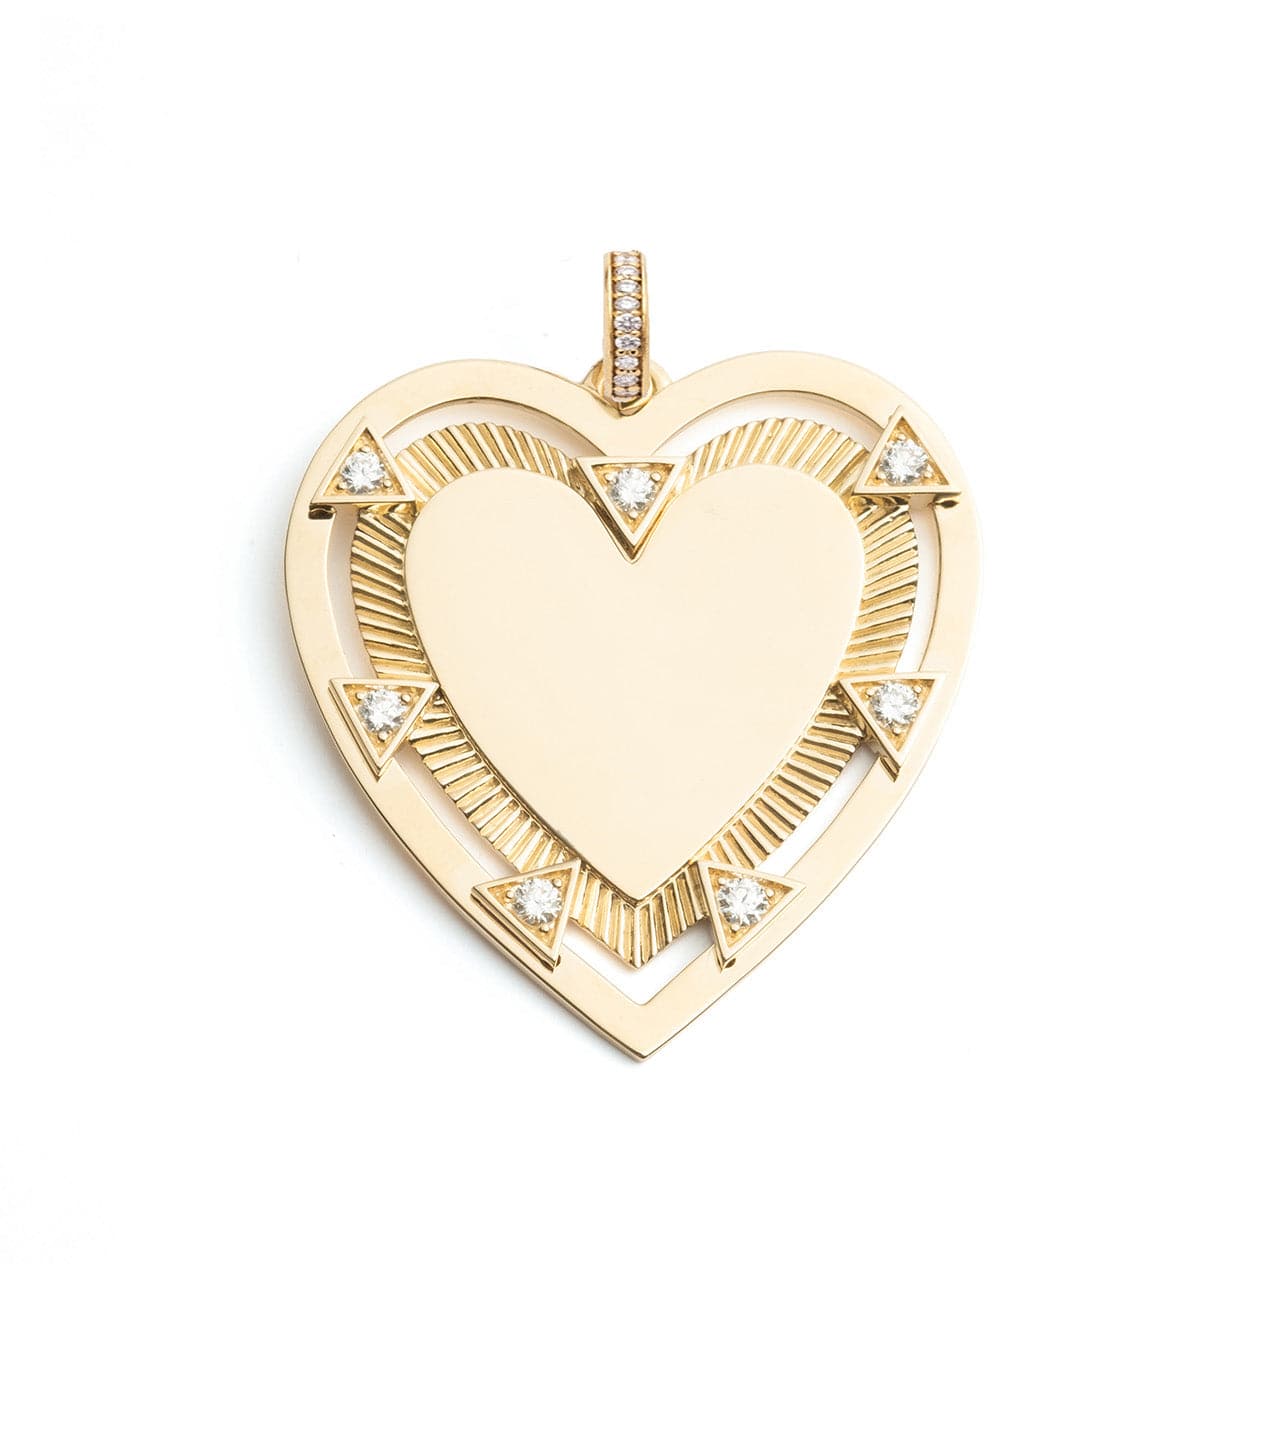 Heart - True Love : Oversized Engravable Heart Medallion with Oval Pushgate